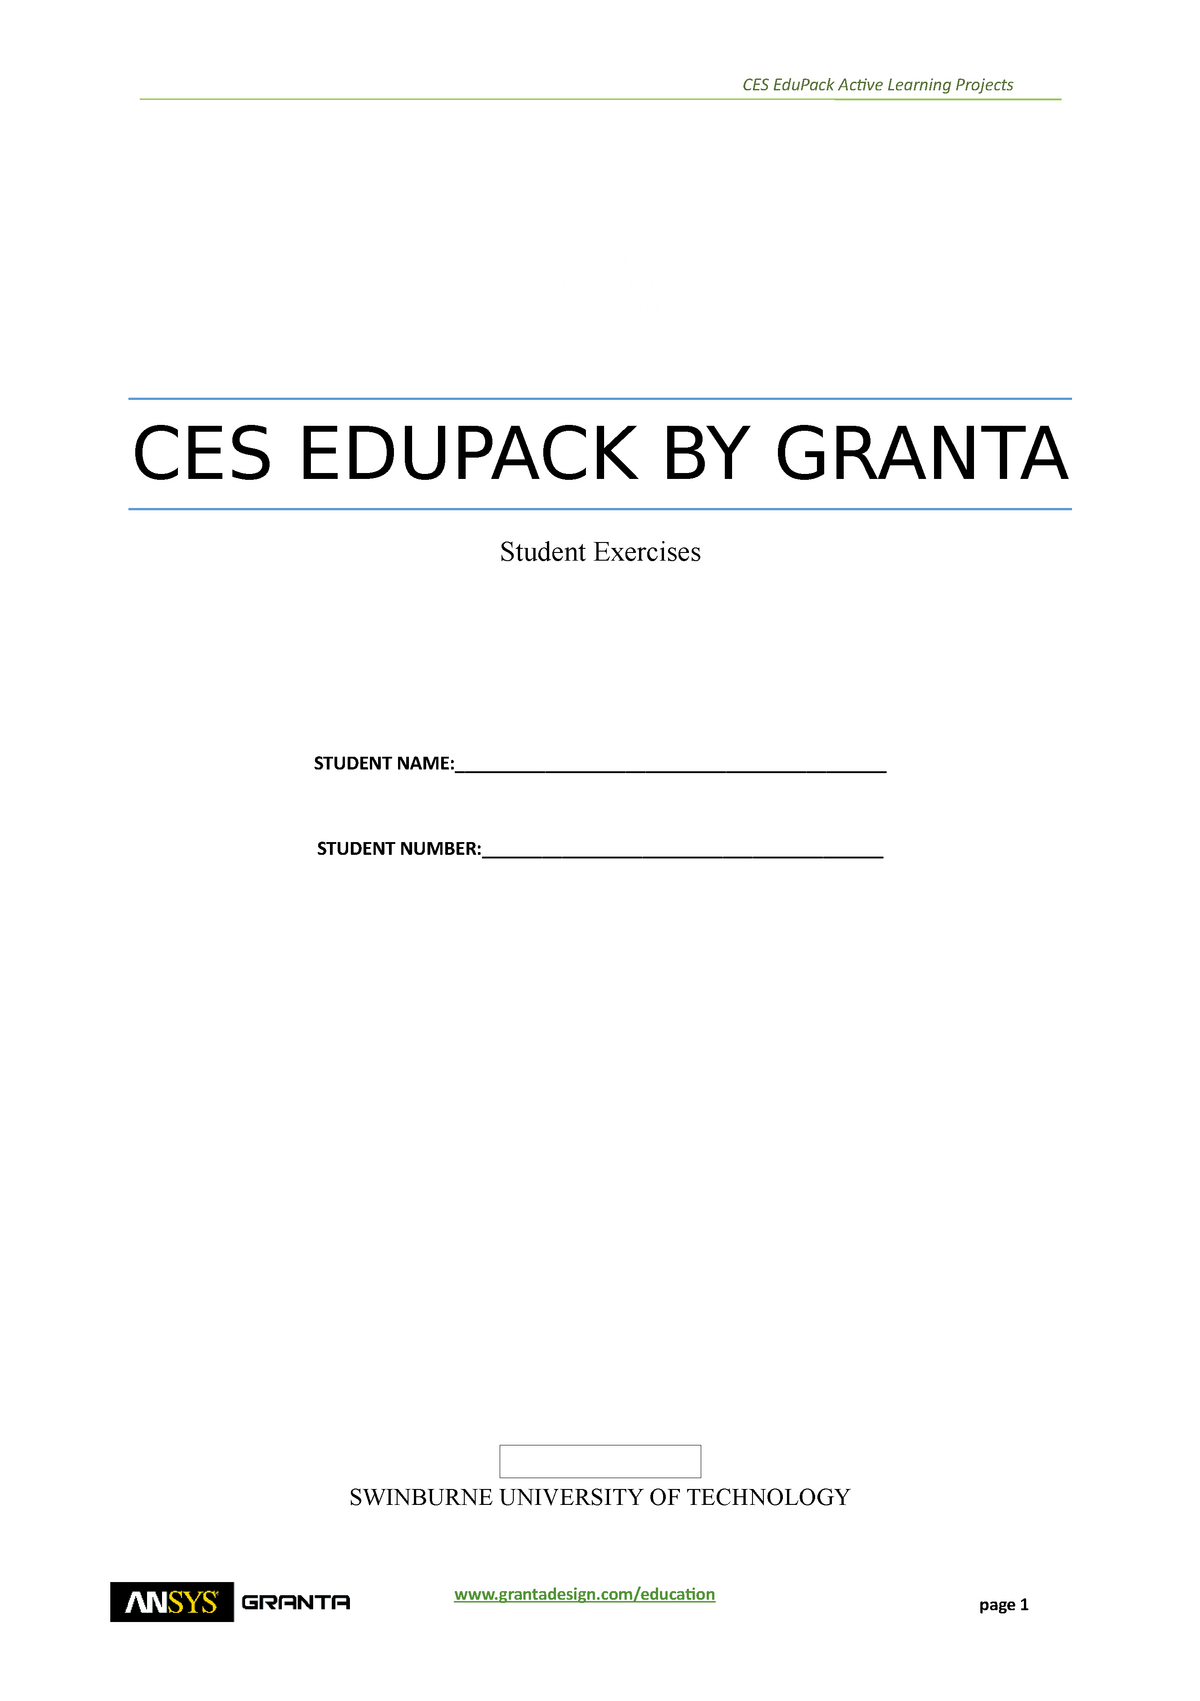 how to cite granta ces edupack software